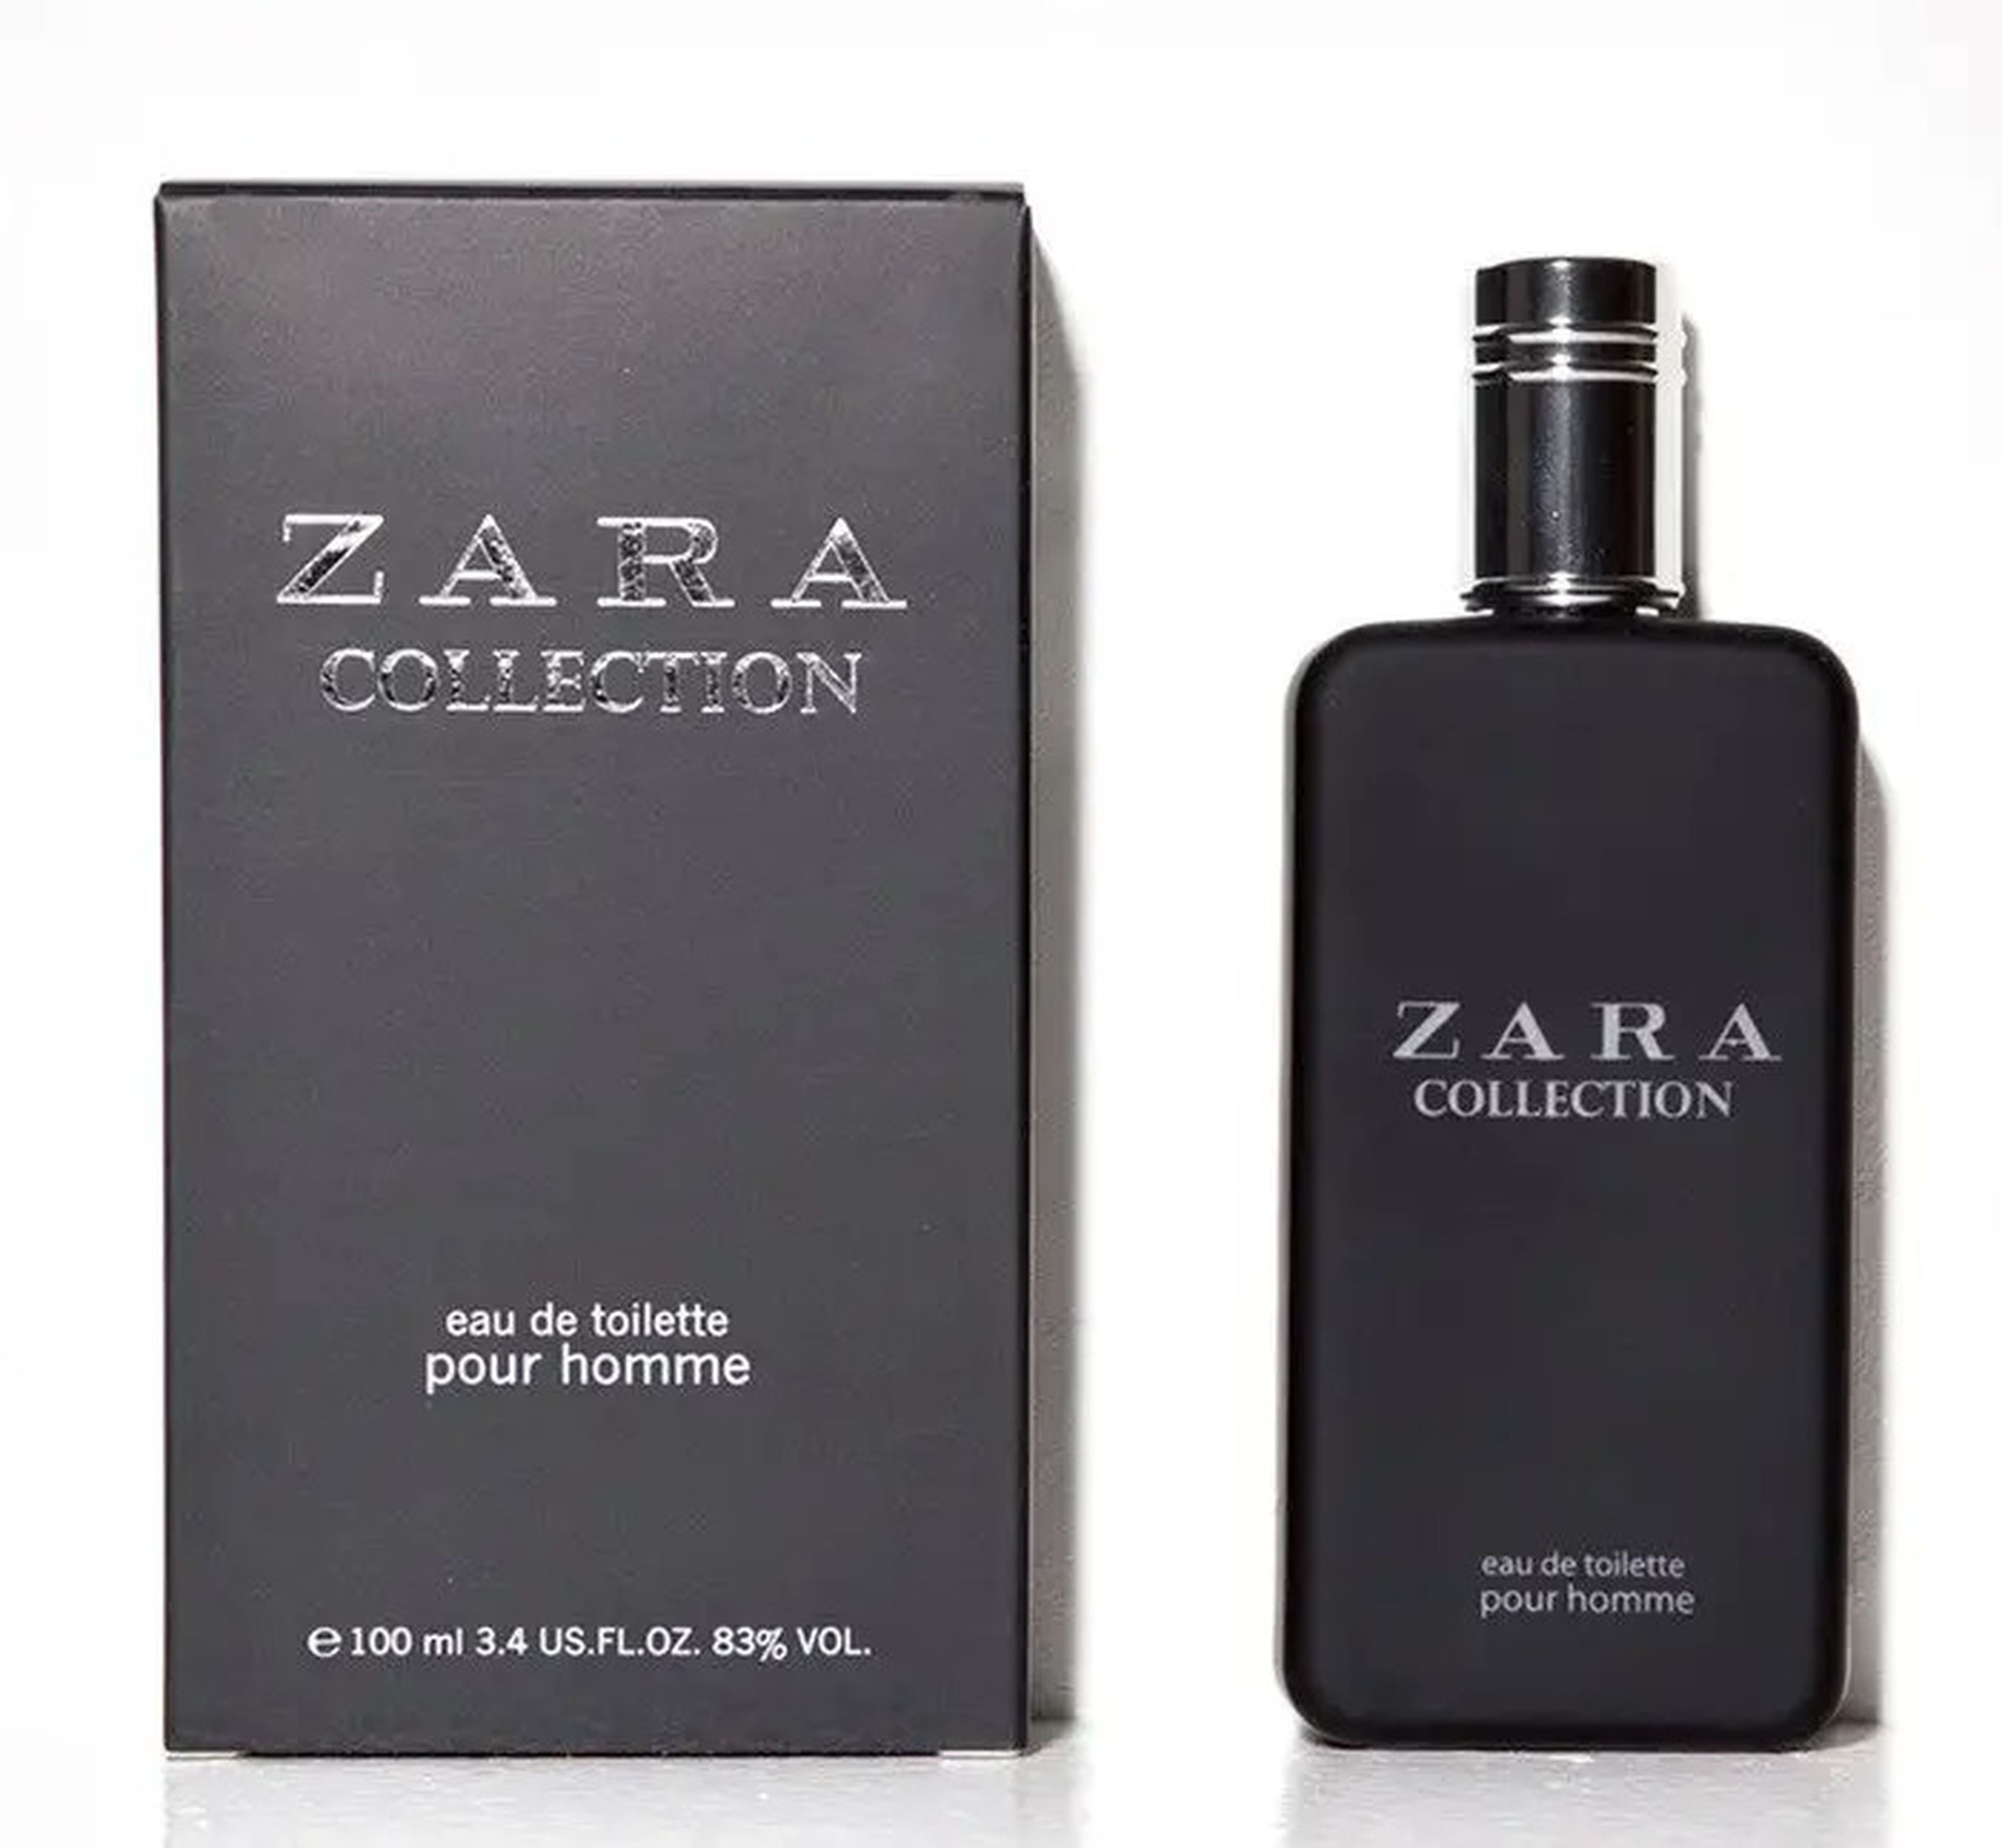 Zara Collection de Zara es equivalente a 1 Million Paco Rabanne